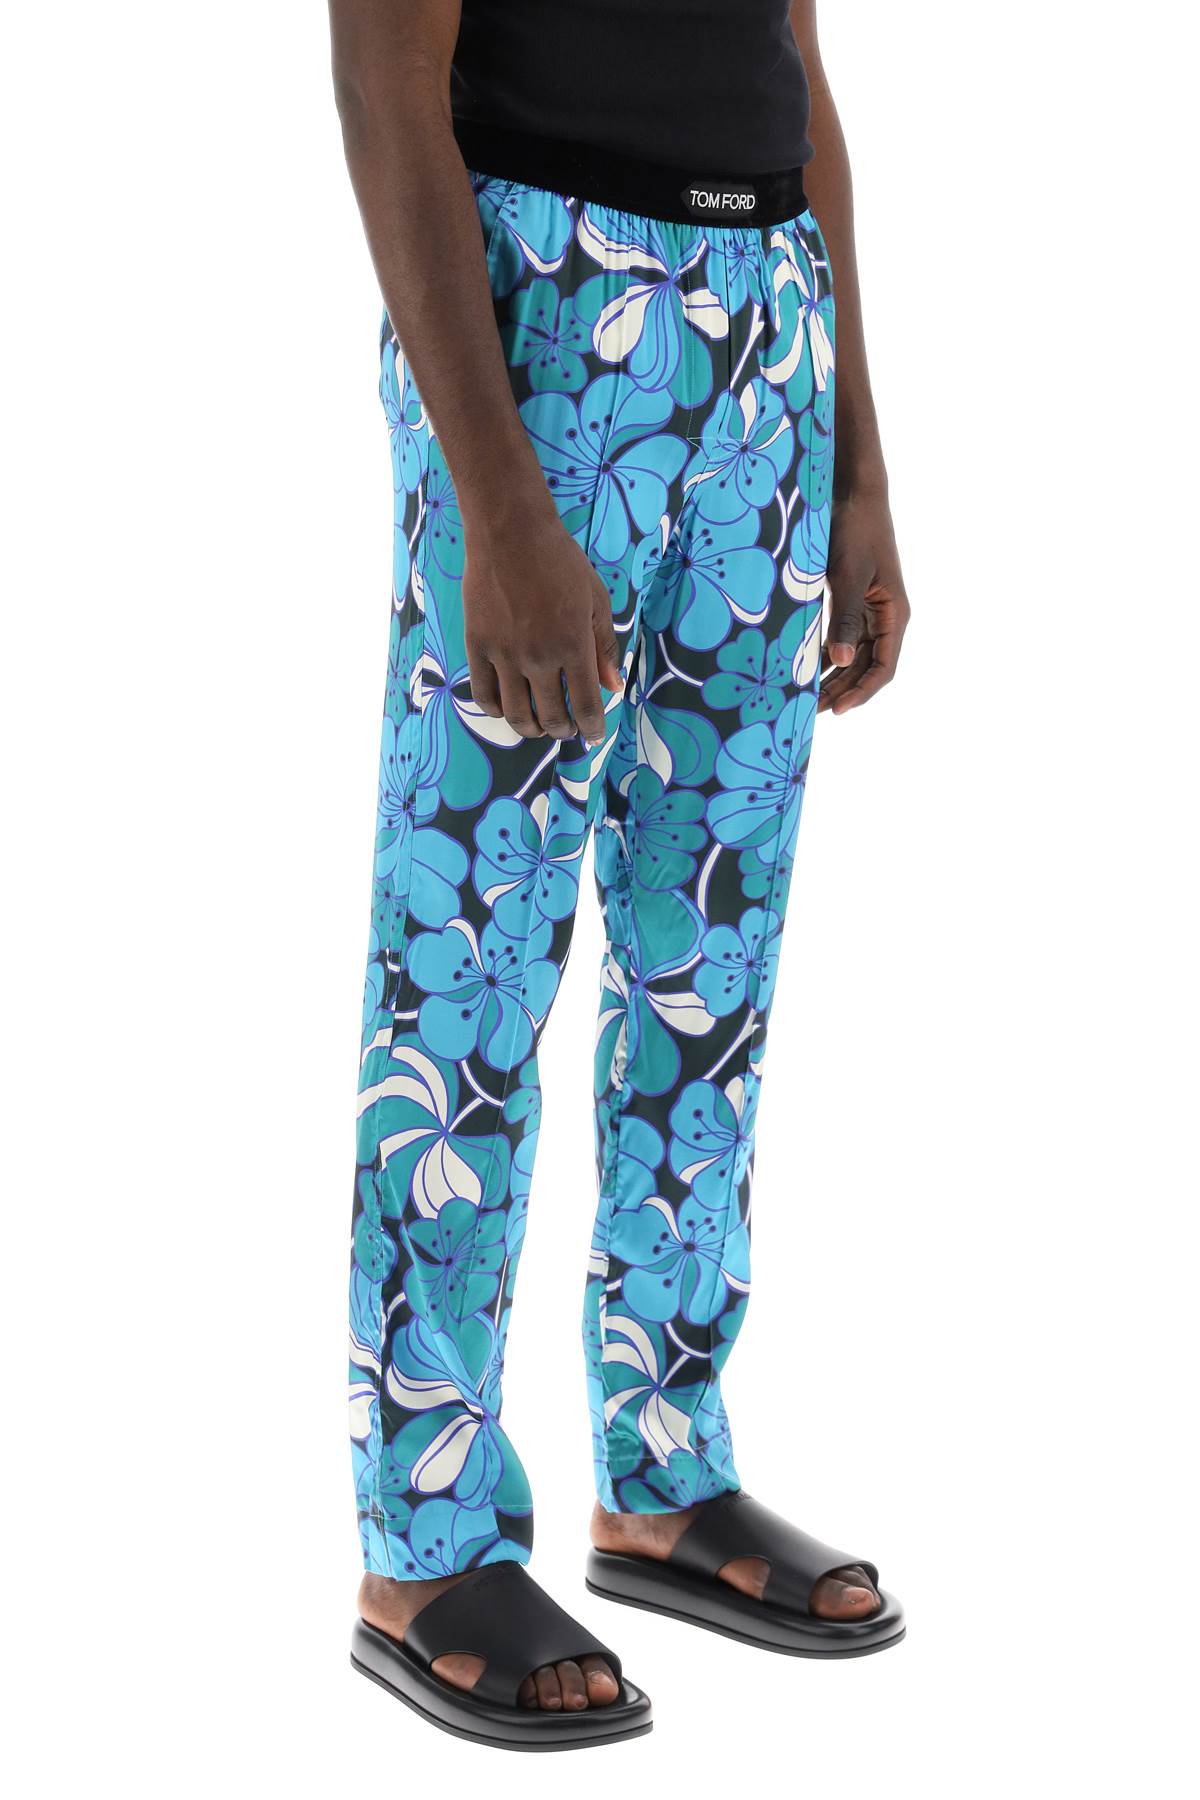 Tom ford pajama pants in floral silk-1